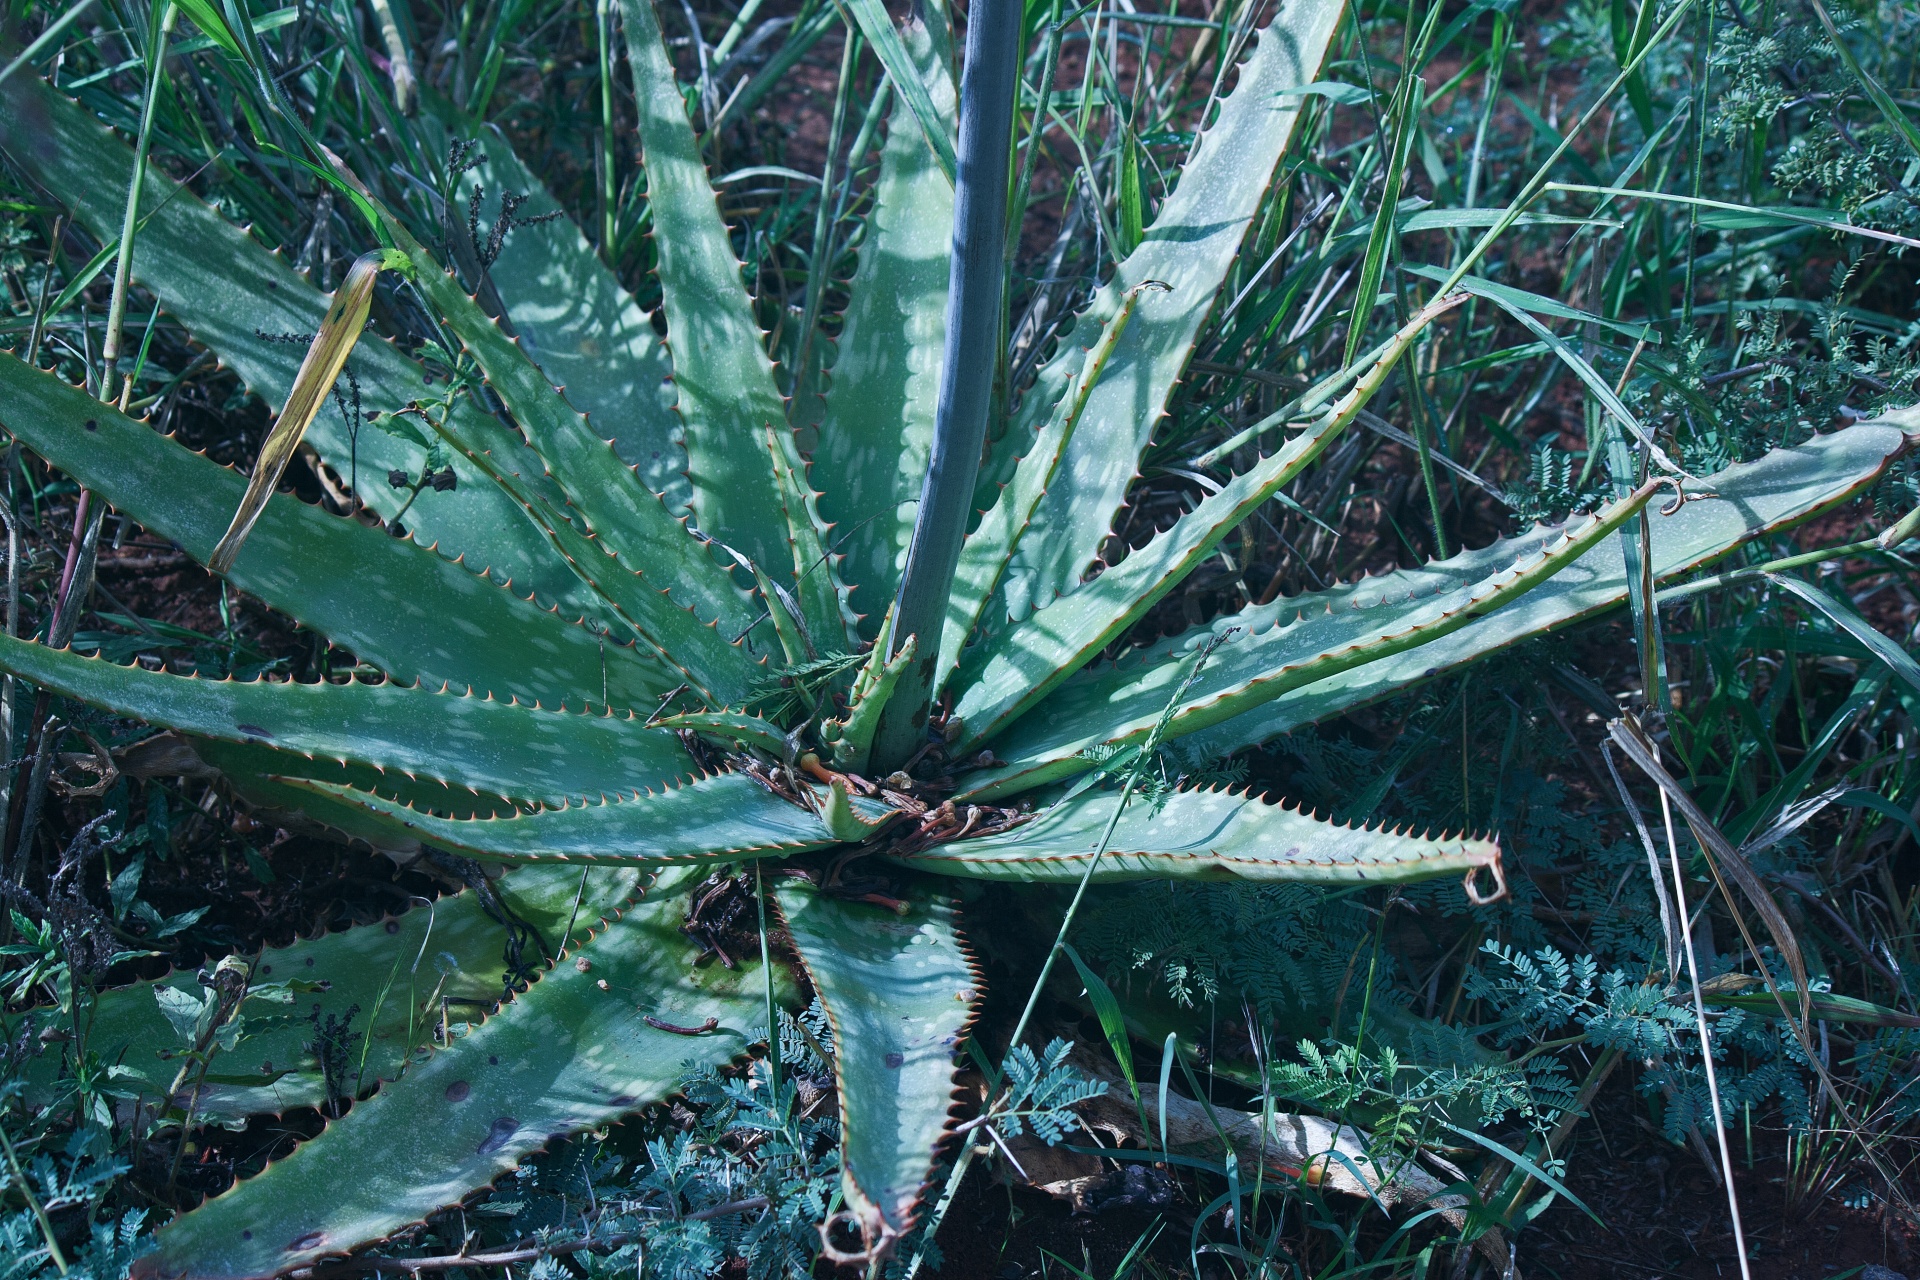 Base Of Aloe Plant With Long Stem